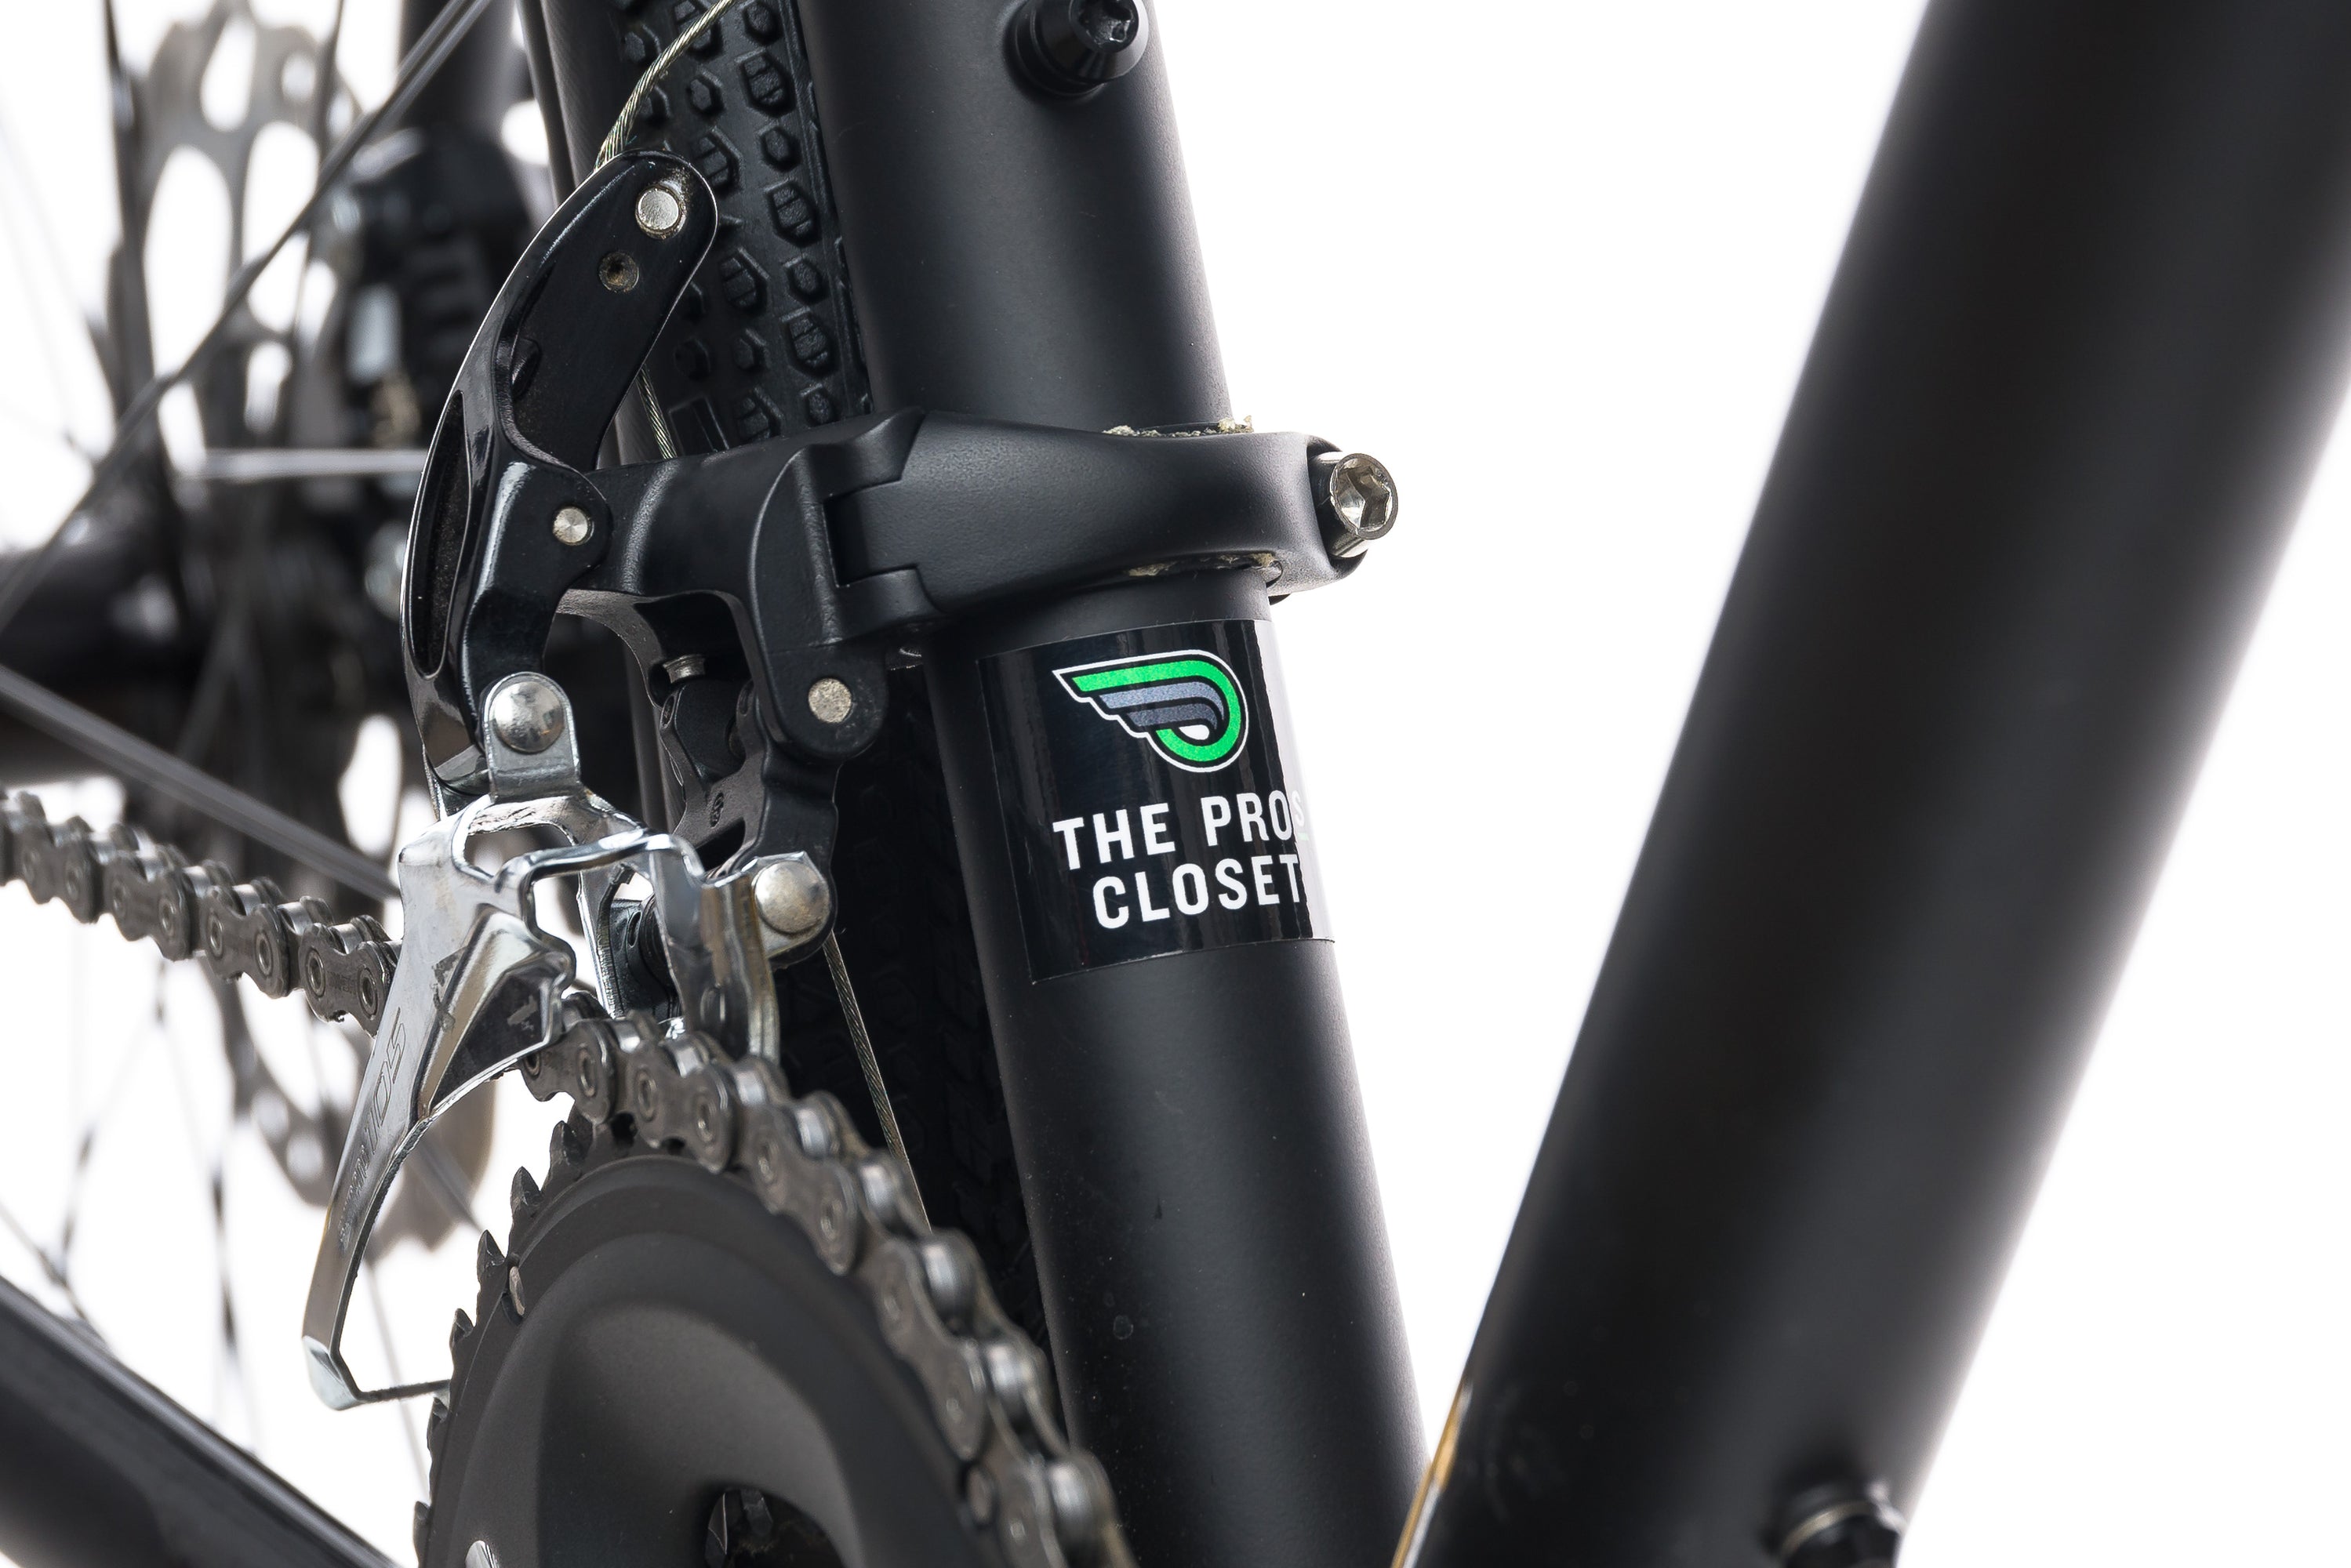 Jamis Renegade Exploit 51cm Bike - 2017 sticker